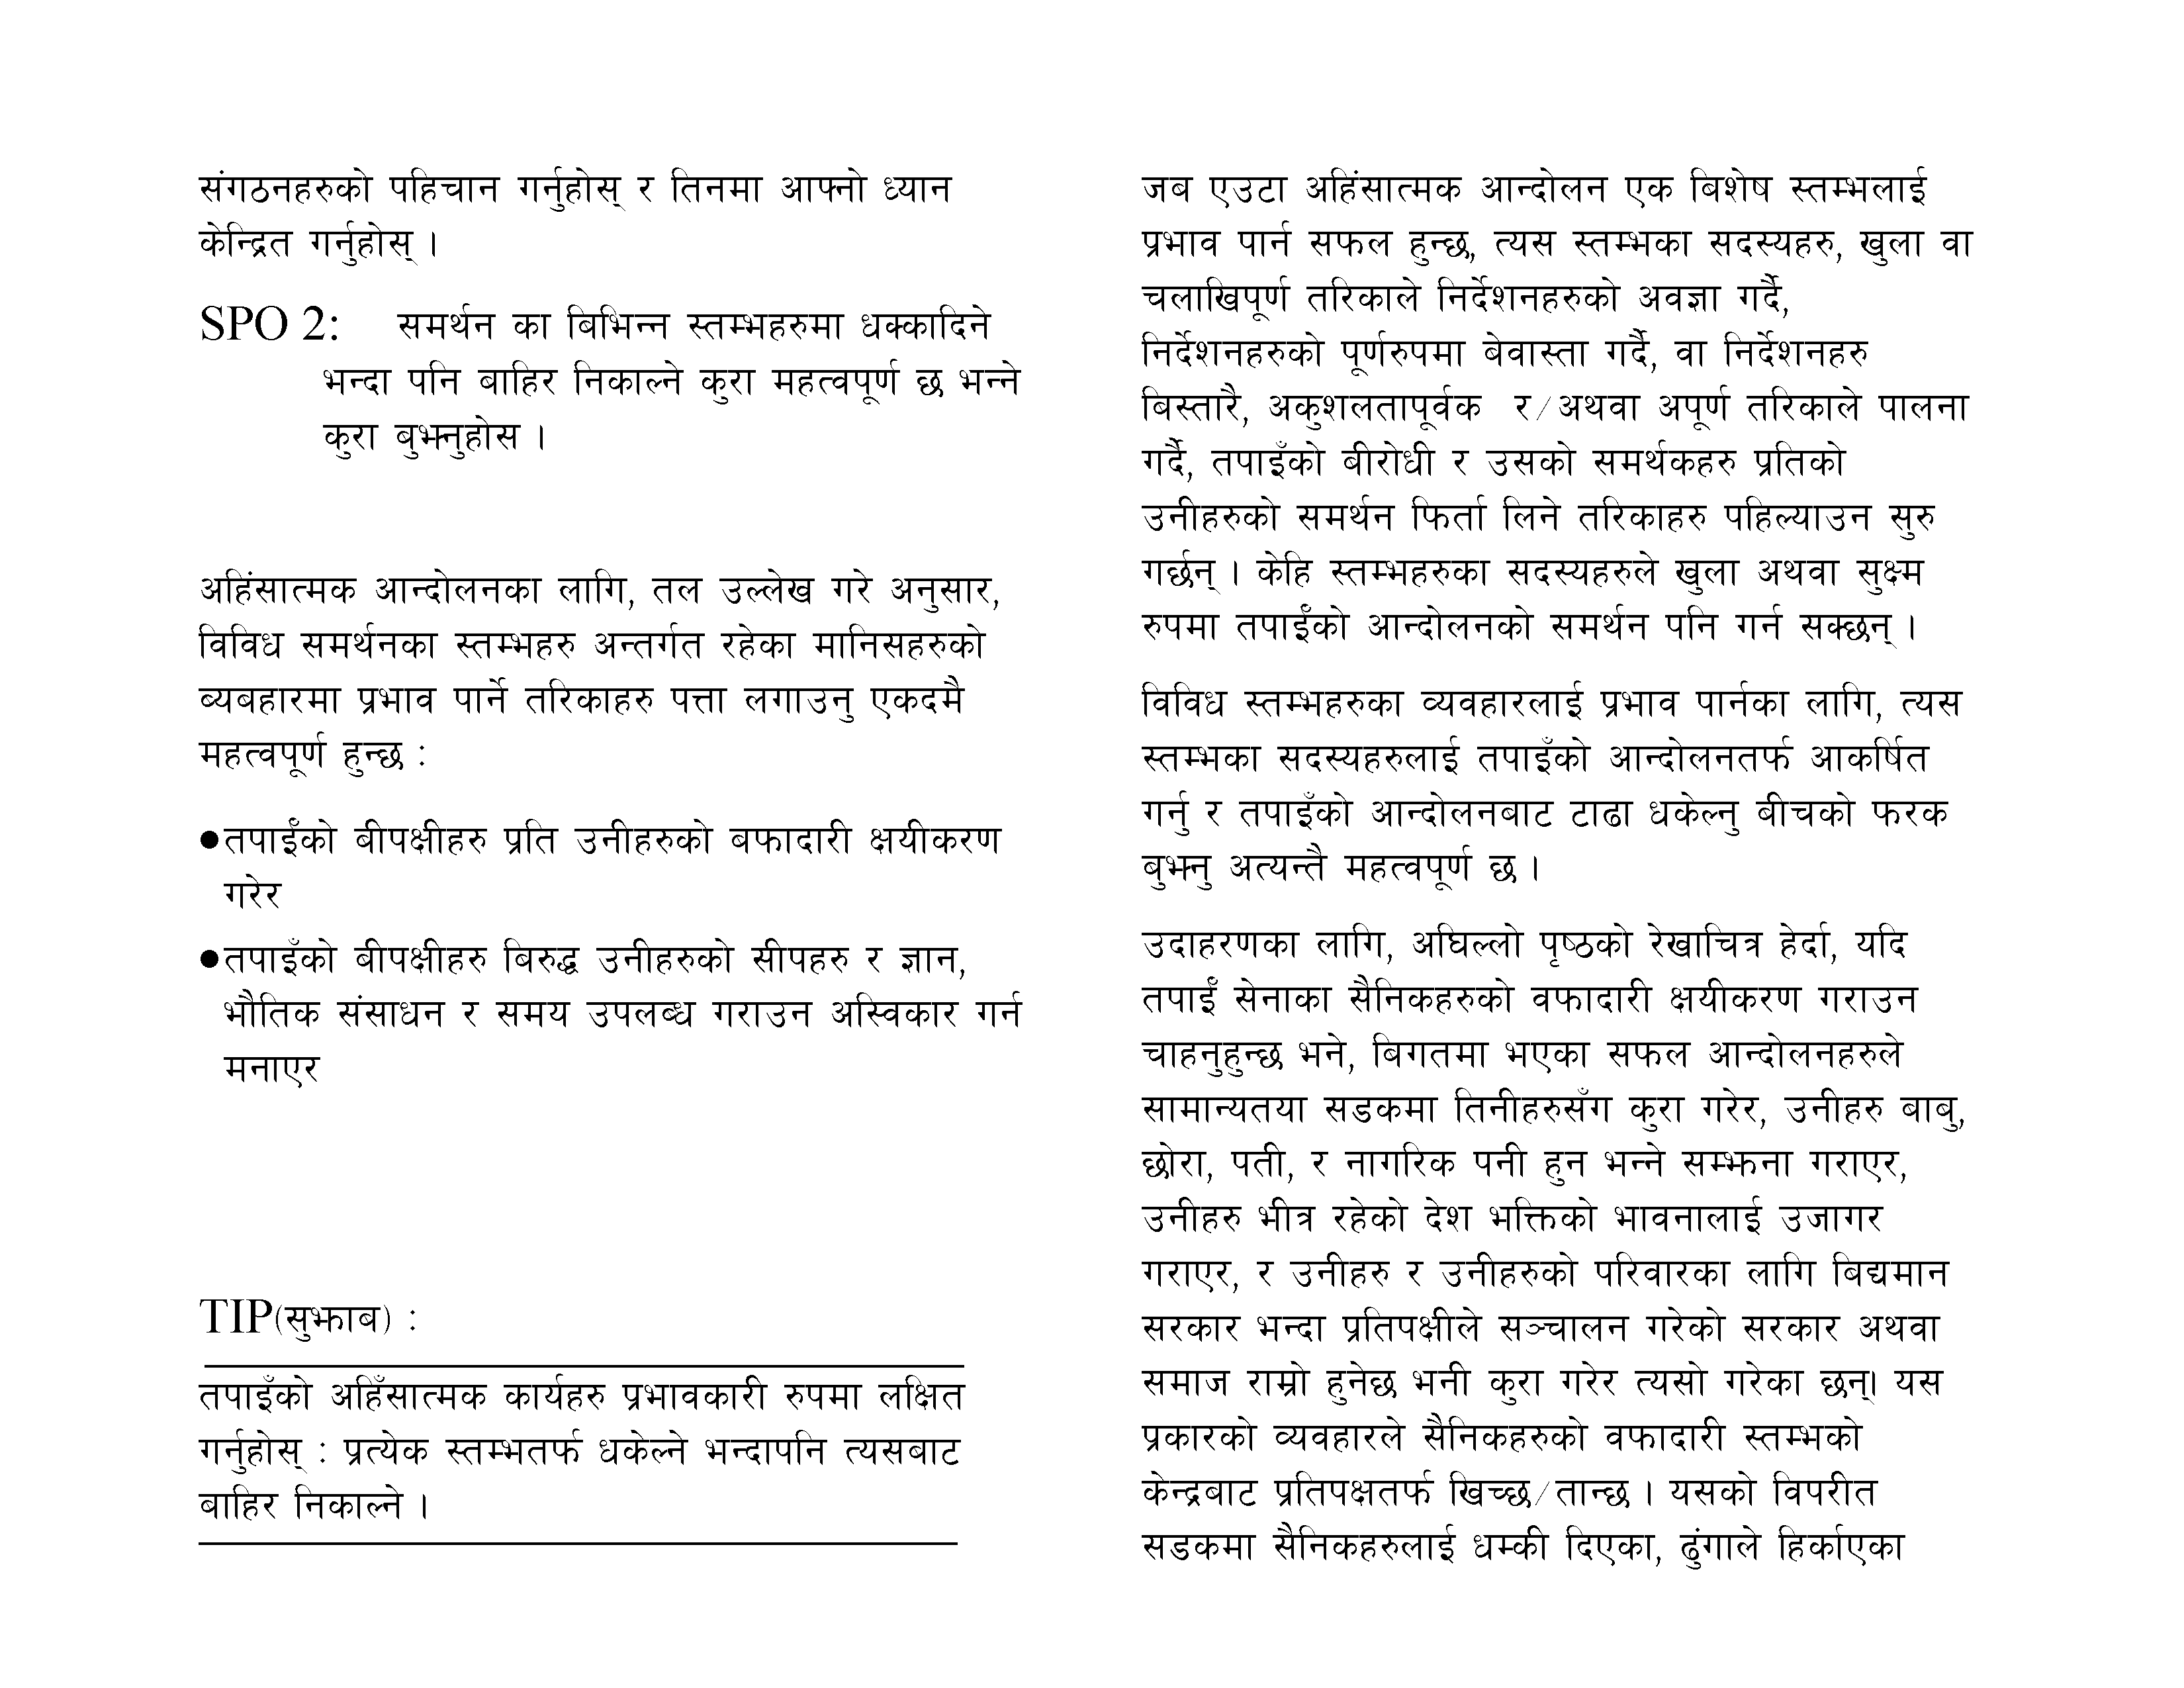 Pillars of Support (Nepali)